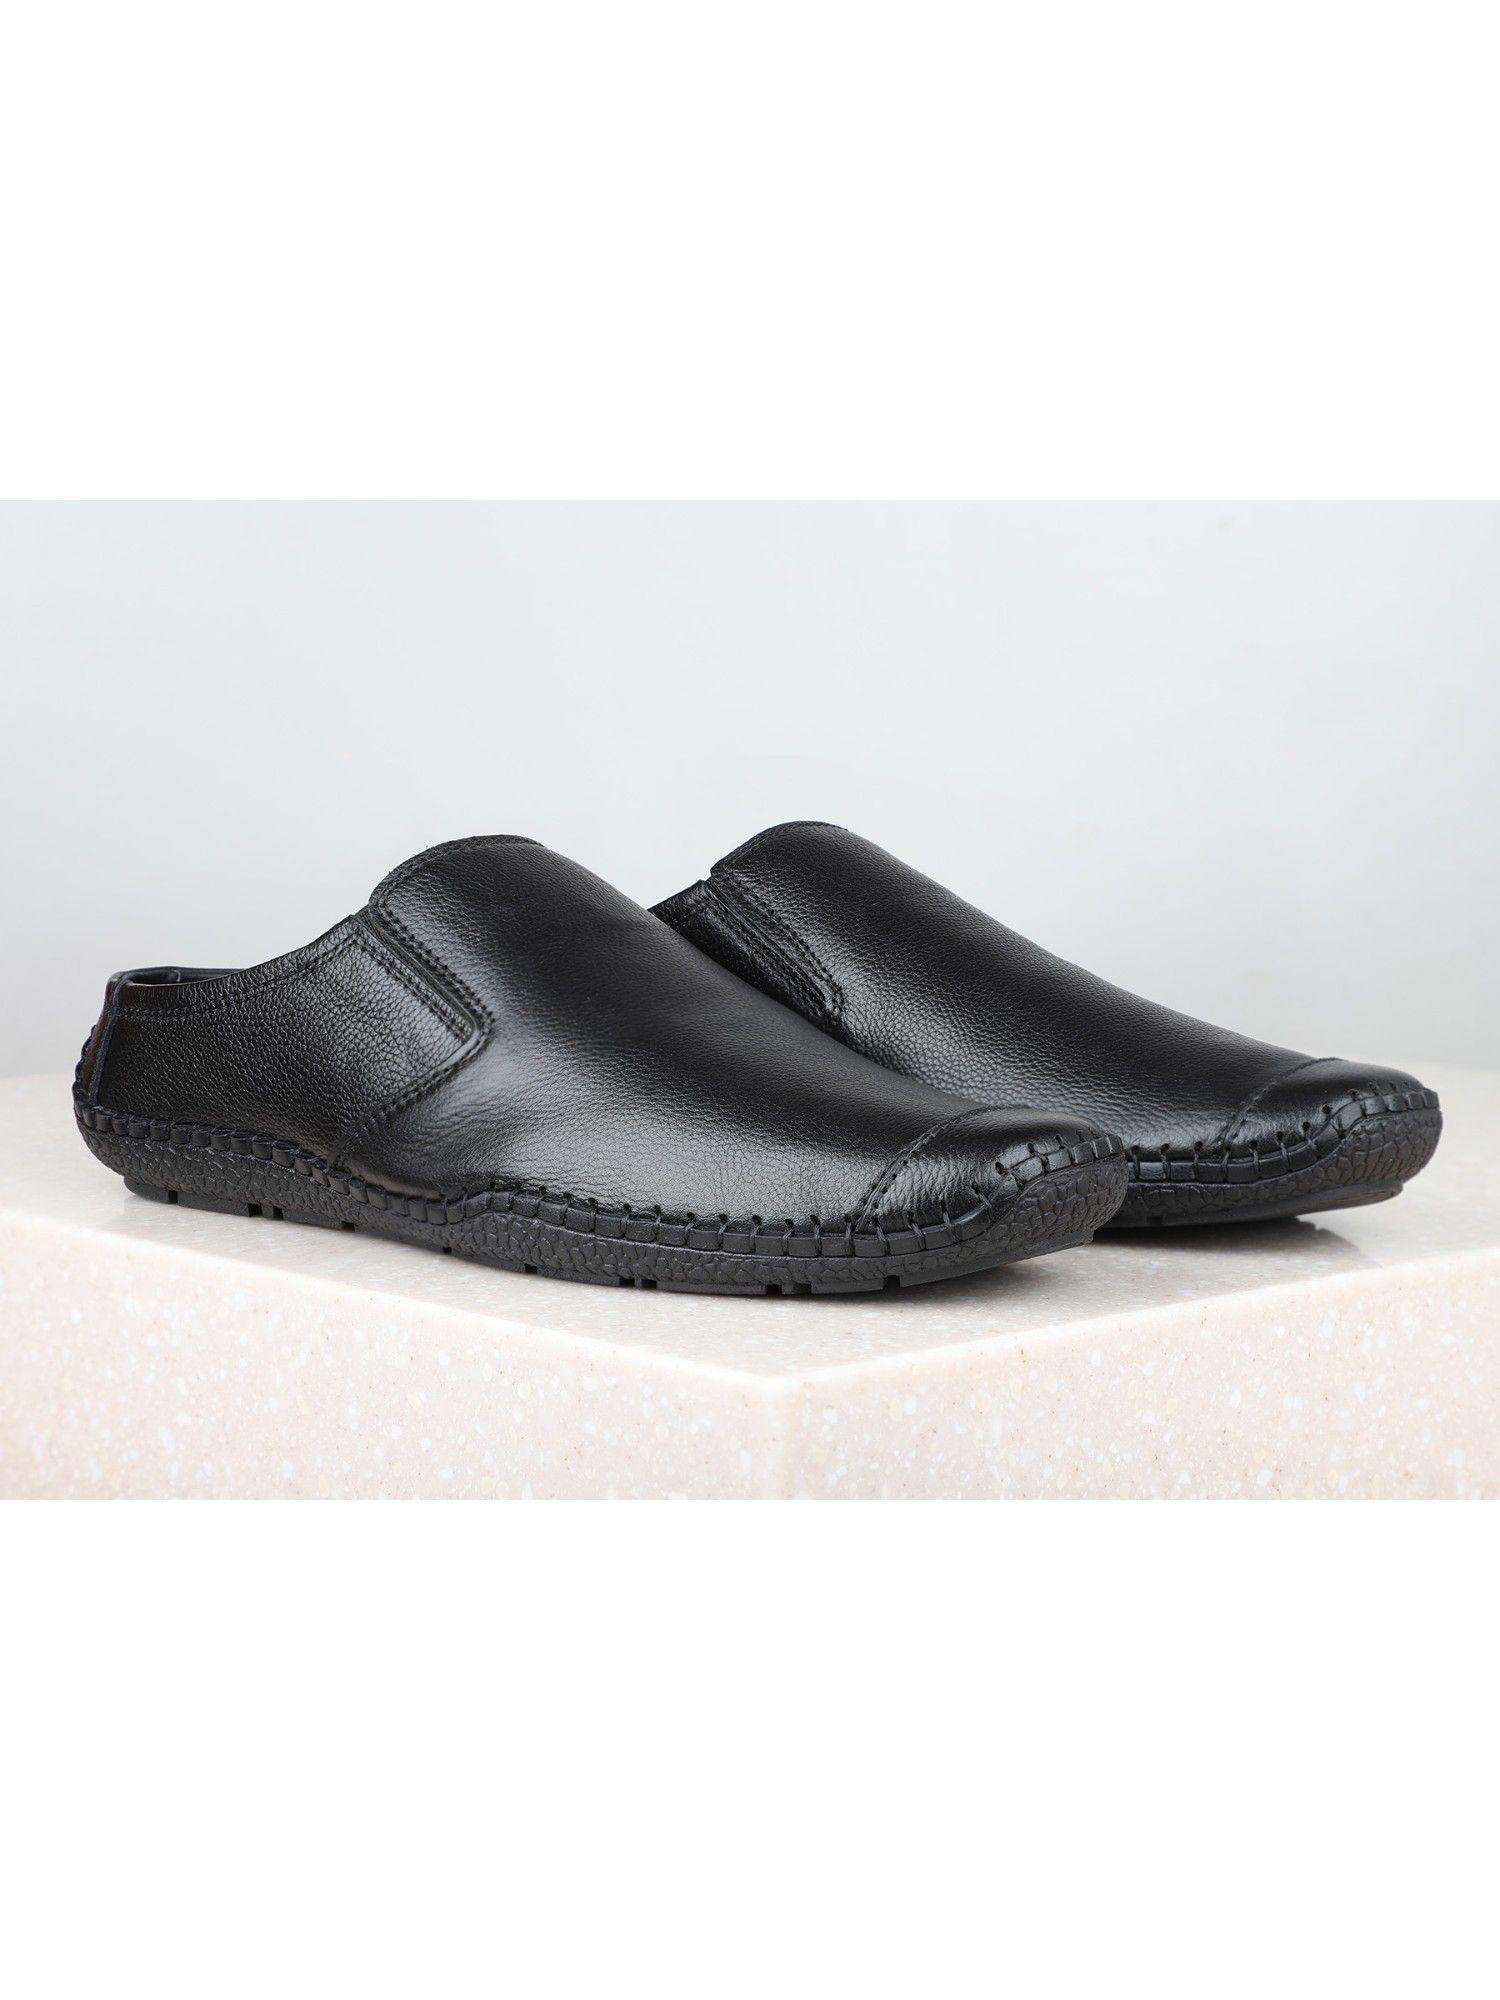 solid-plain black casual shoes